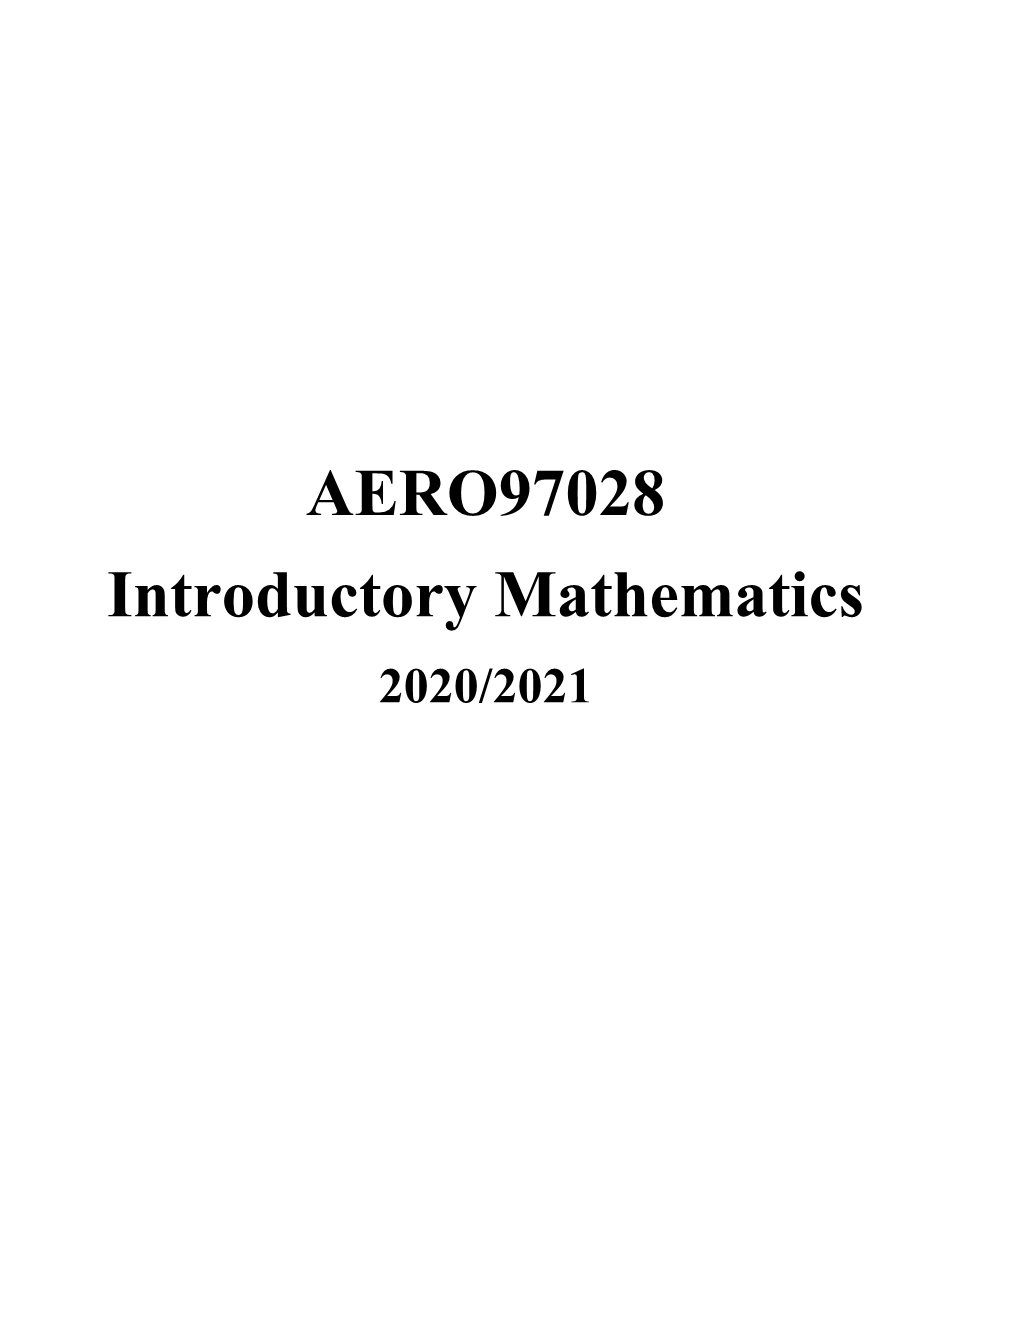 AERO97028 Introductory Mathematics